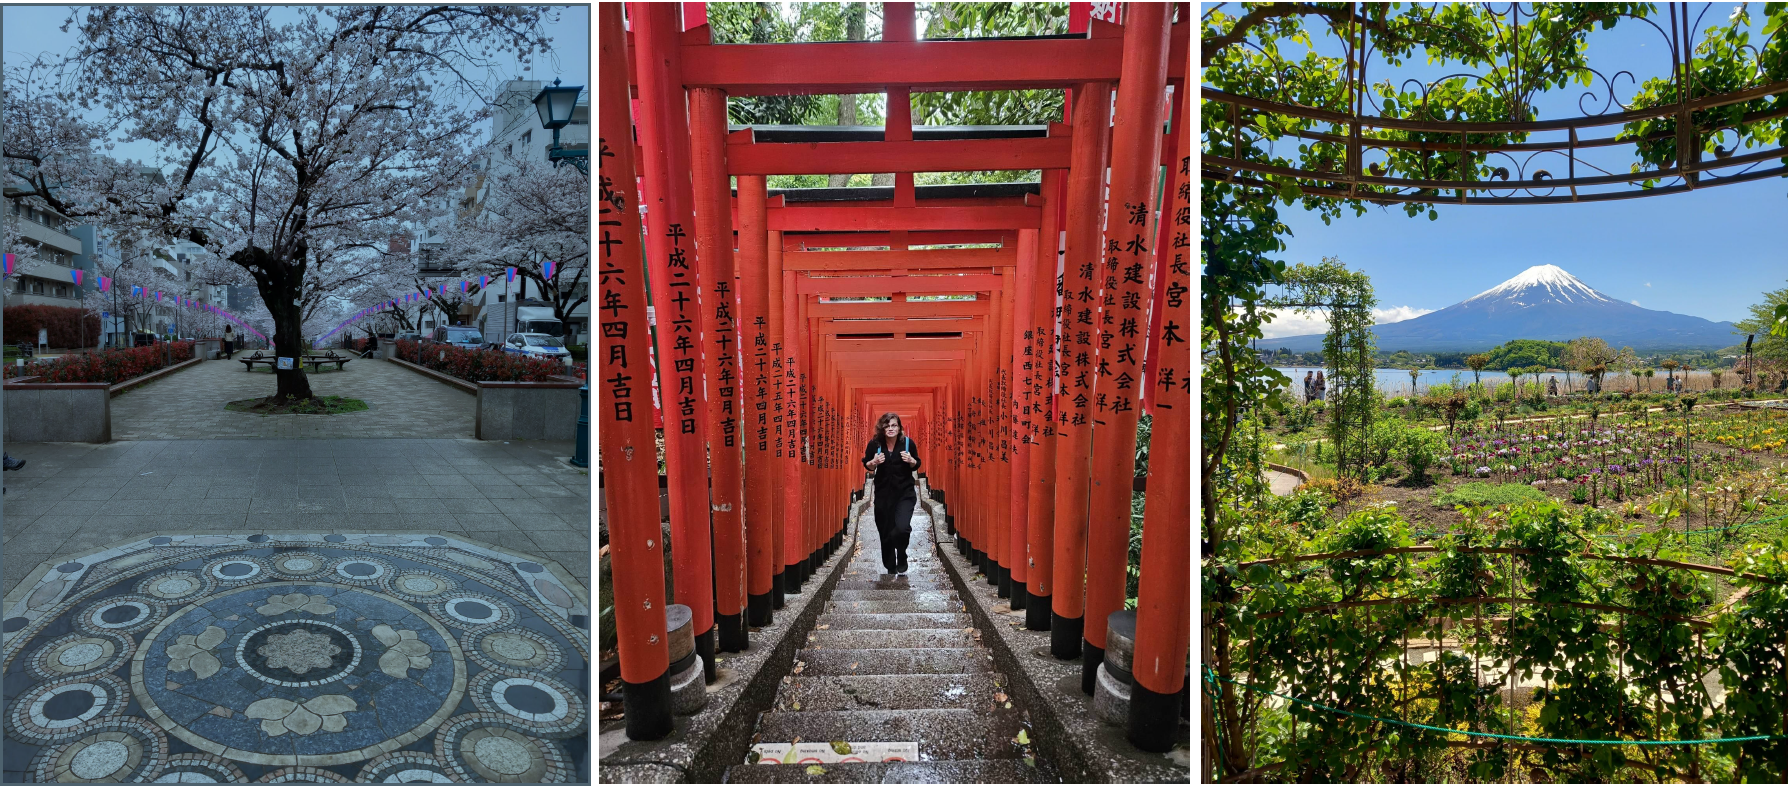 Tredelt bilde hvor første del viser kirsebærtre i blomstring, andre del viser en person på vei opp en trapp i et tempel, tredje del viser Mount Fuji